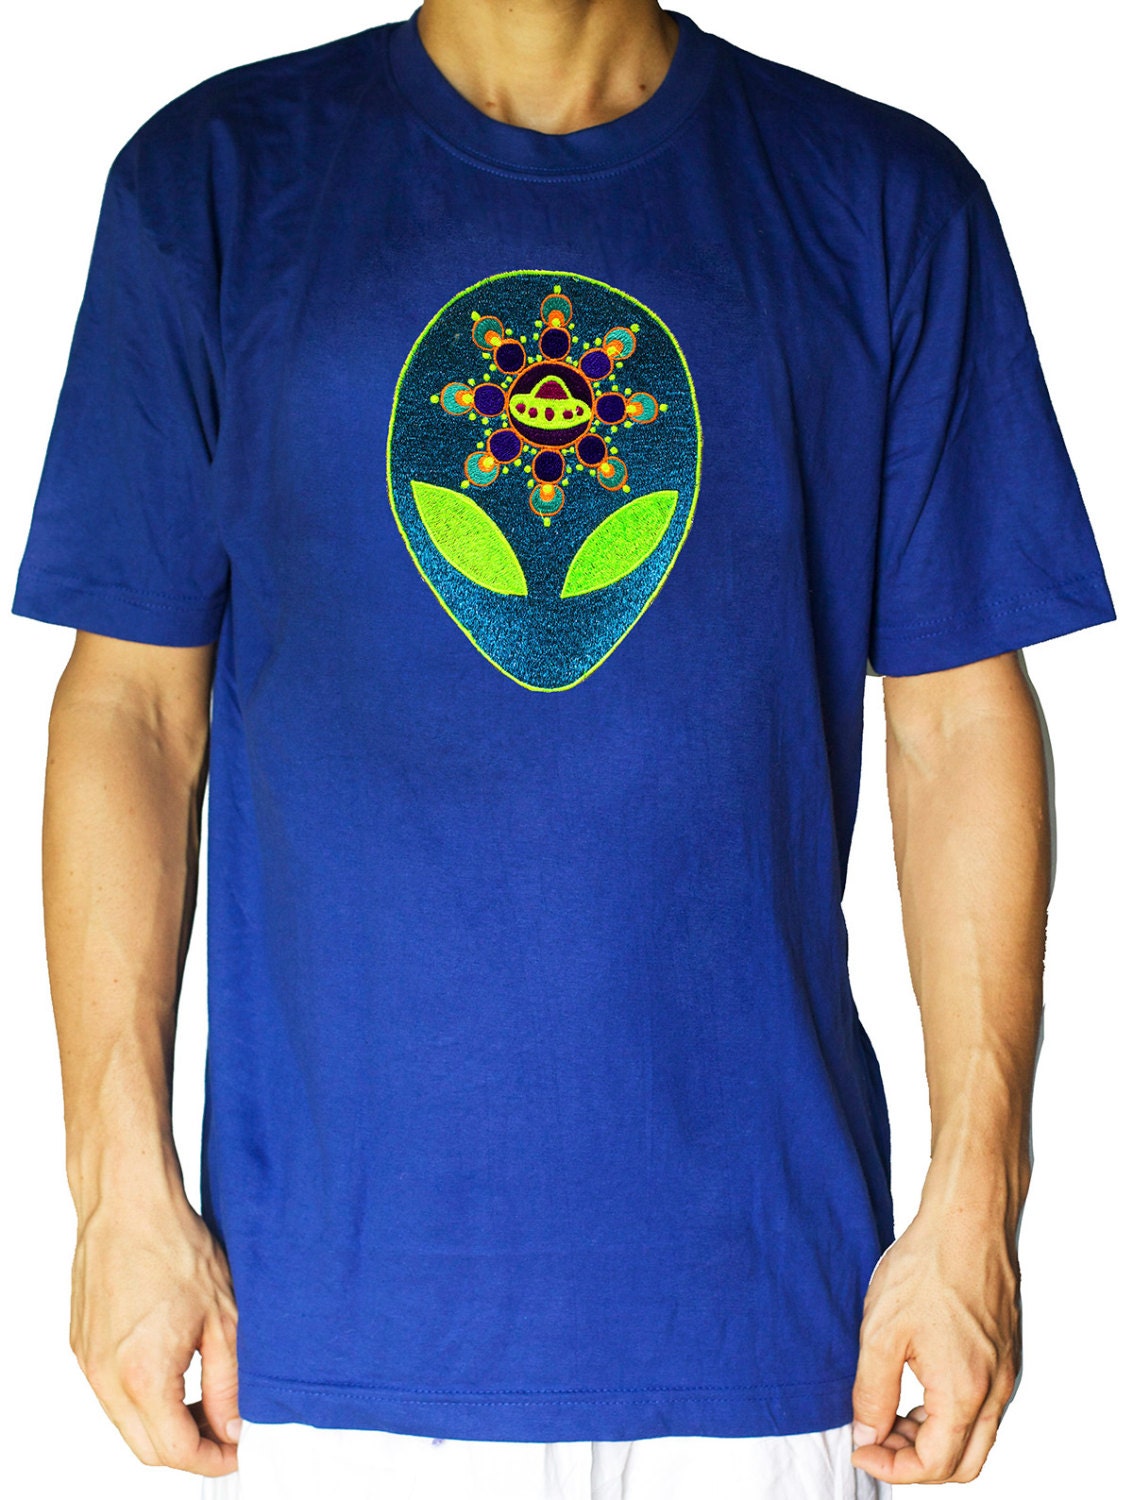 UFO T-Shirt blacklight handmade embroidery no print goa t-shirt ET spaceship alien crop circle mandala